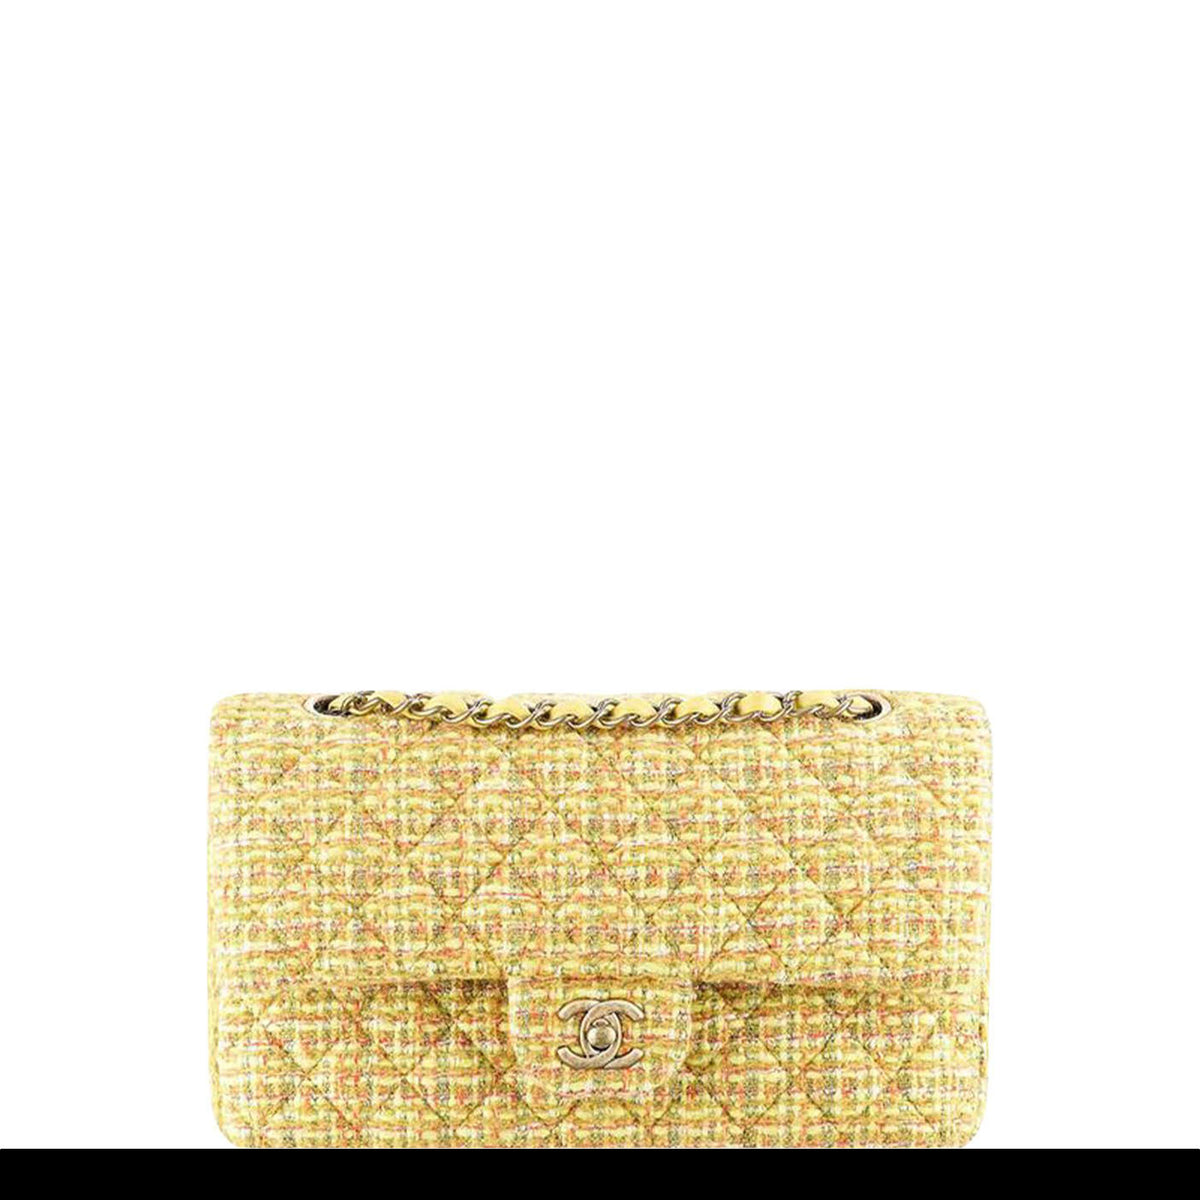 Matches x Sellier Chanel 2.55 Medium Tweed Shoulder Bag Yellow